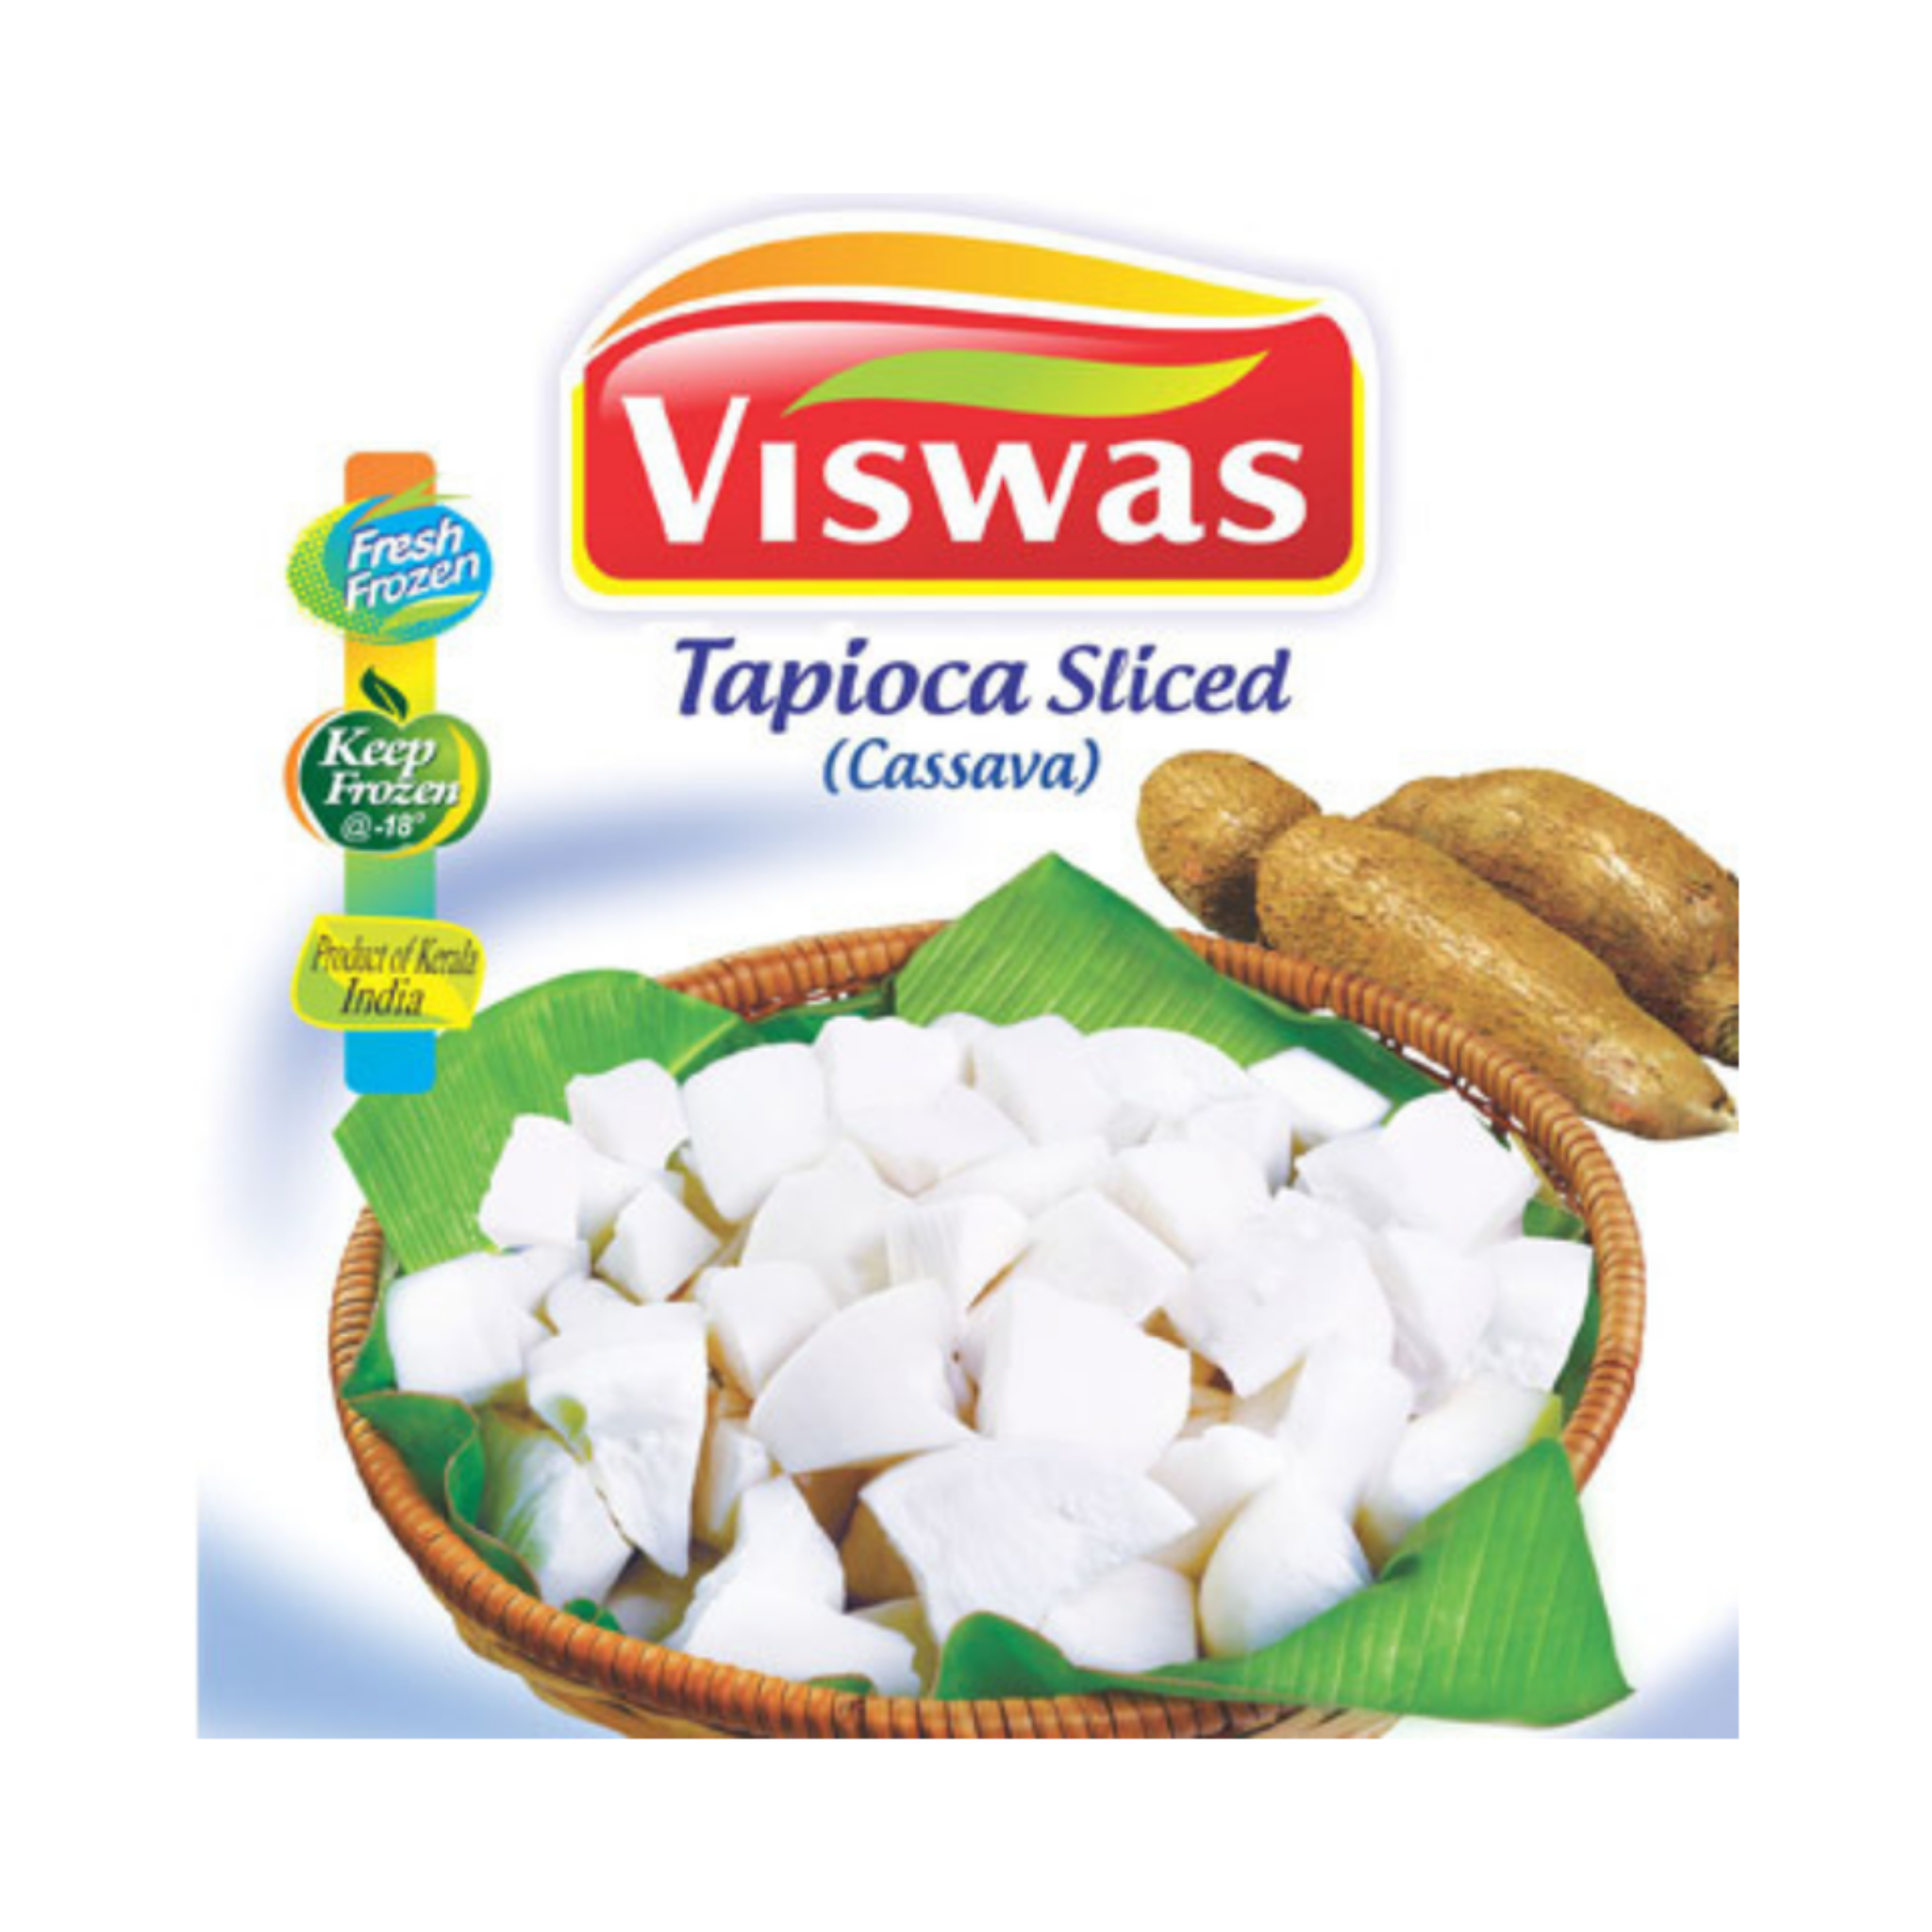 Viswas sliced tapioca